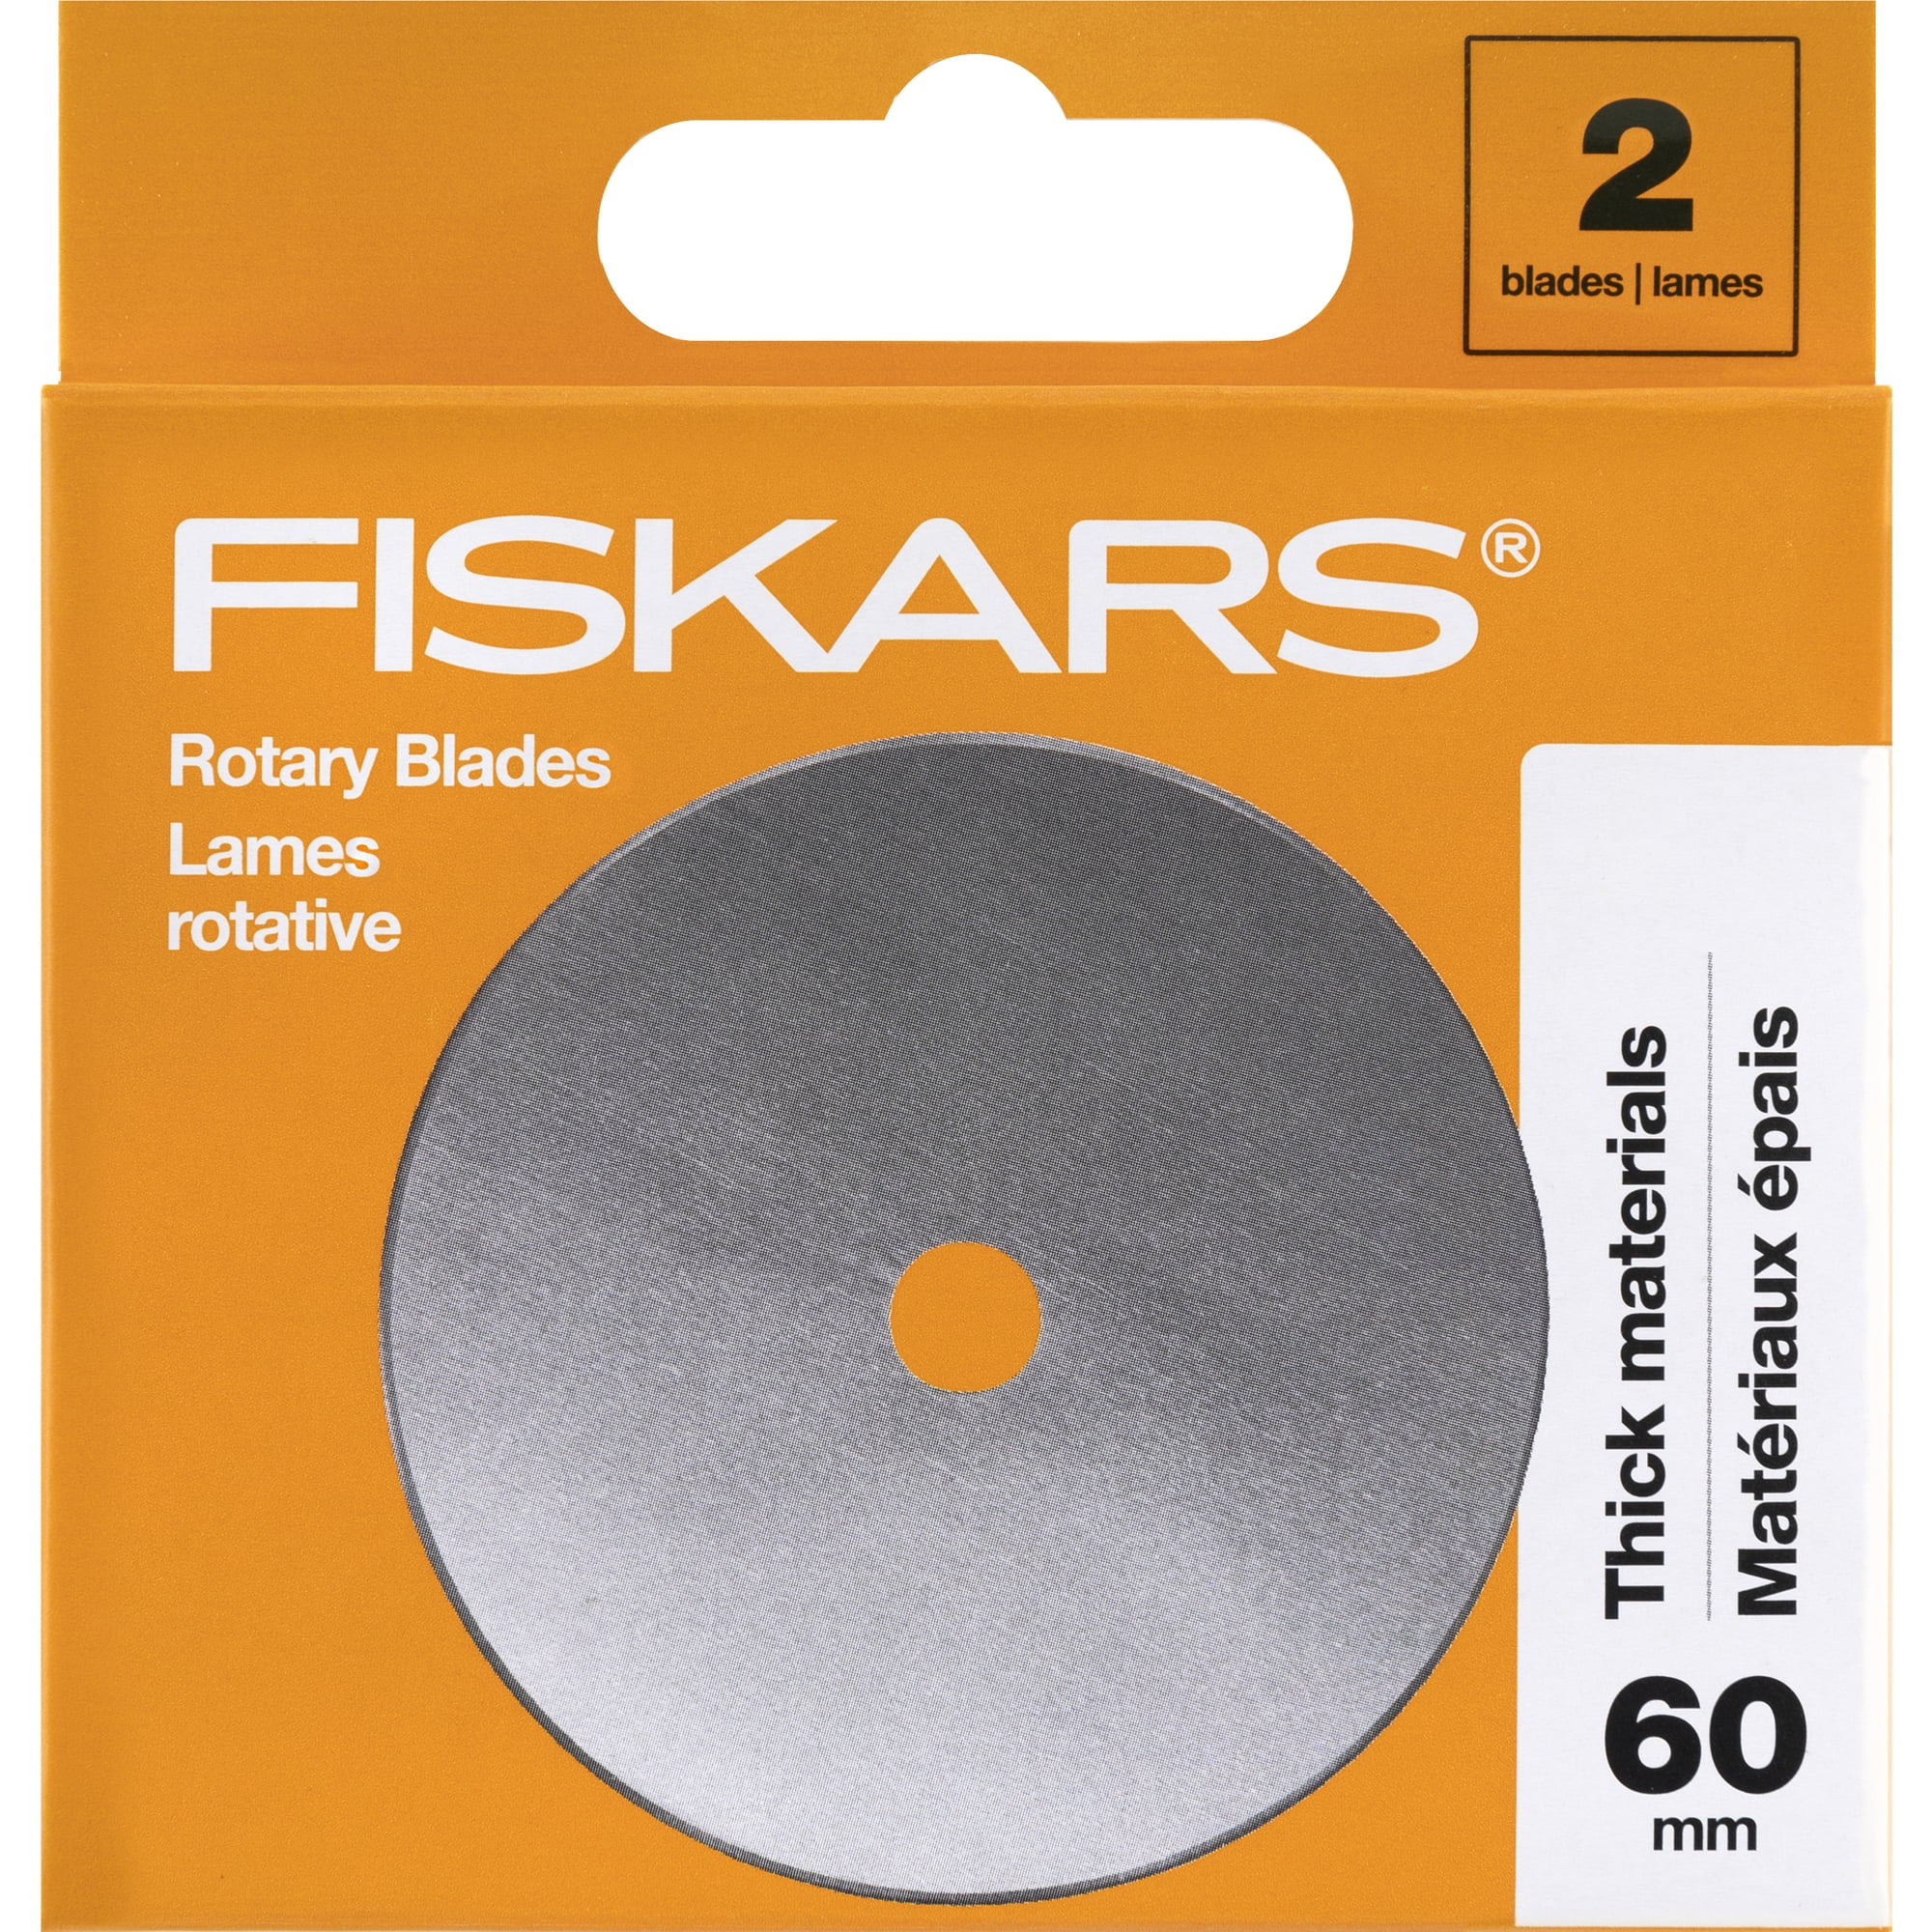 Fiskars Circle Cutter, 1 Each 